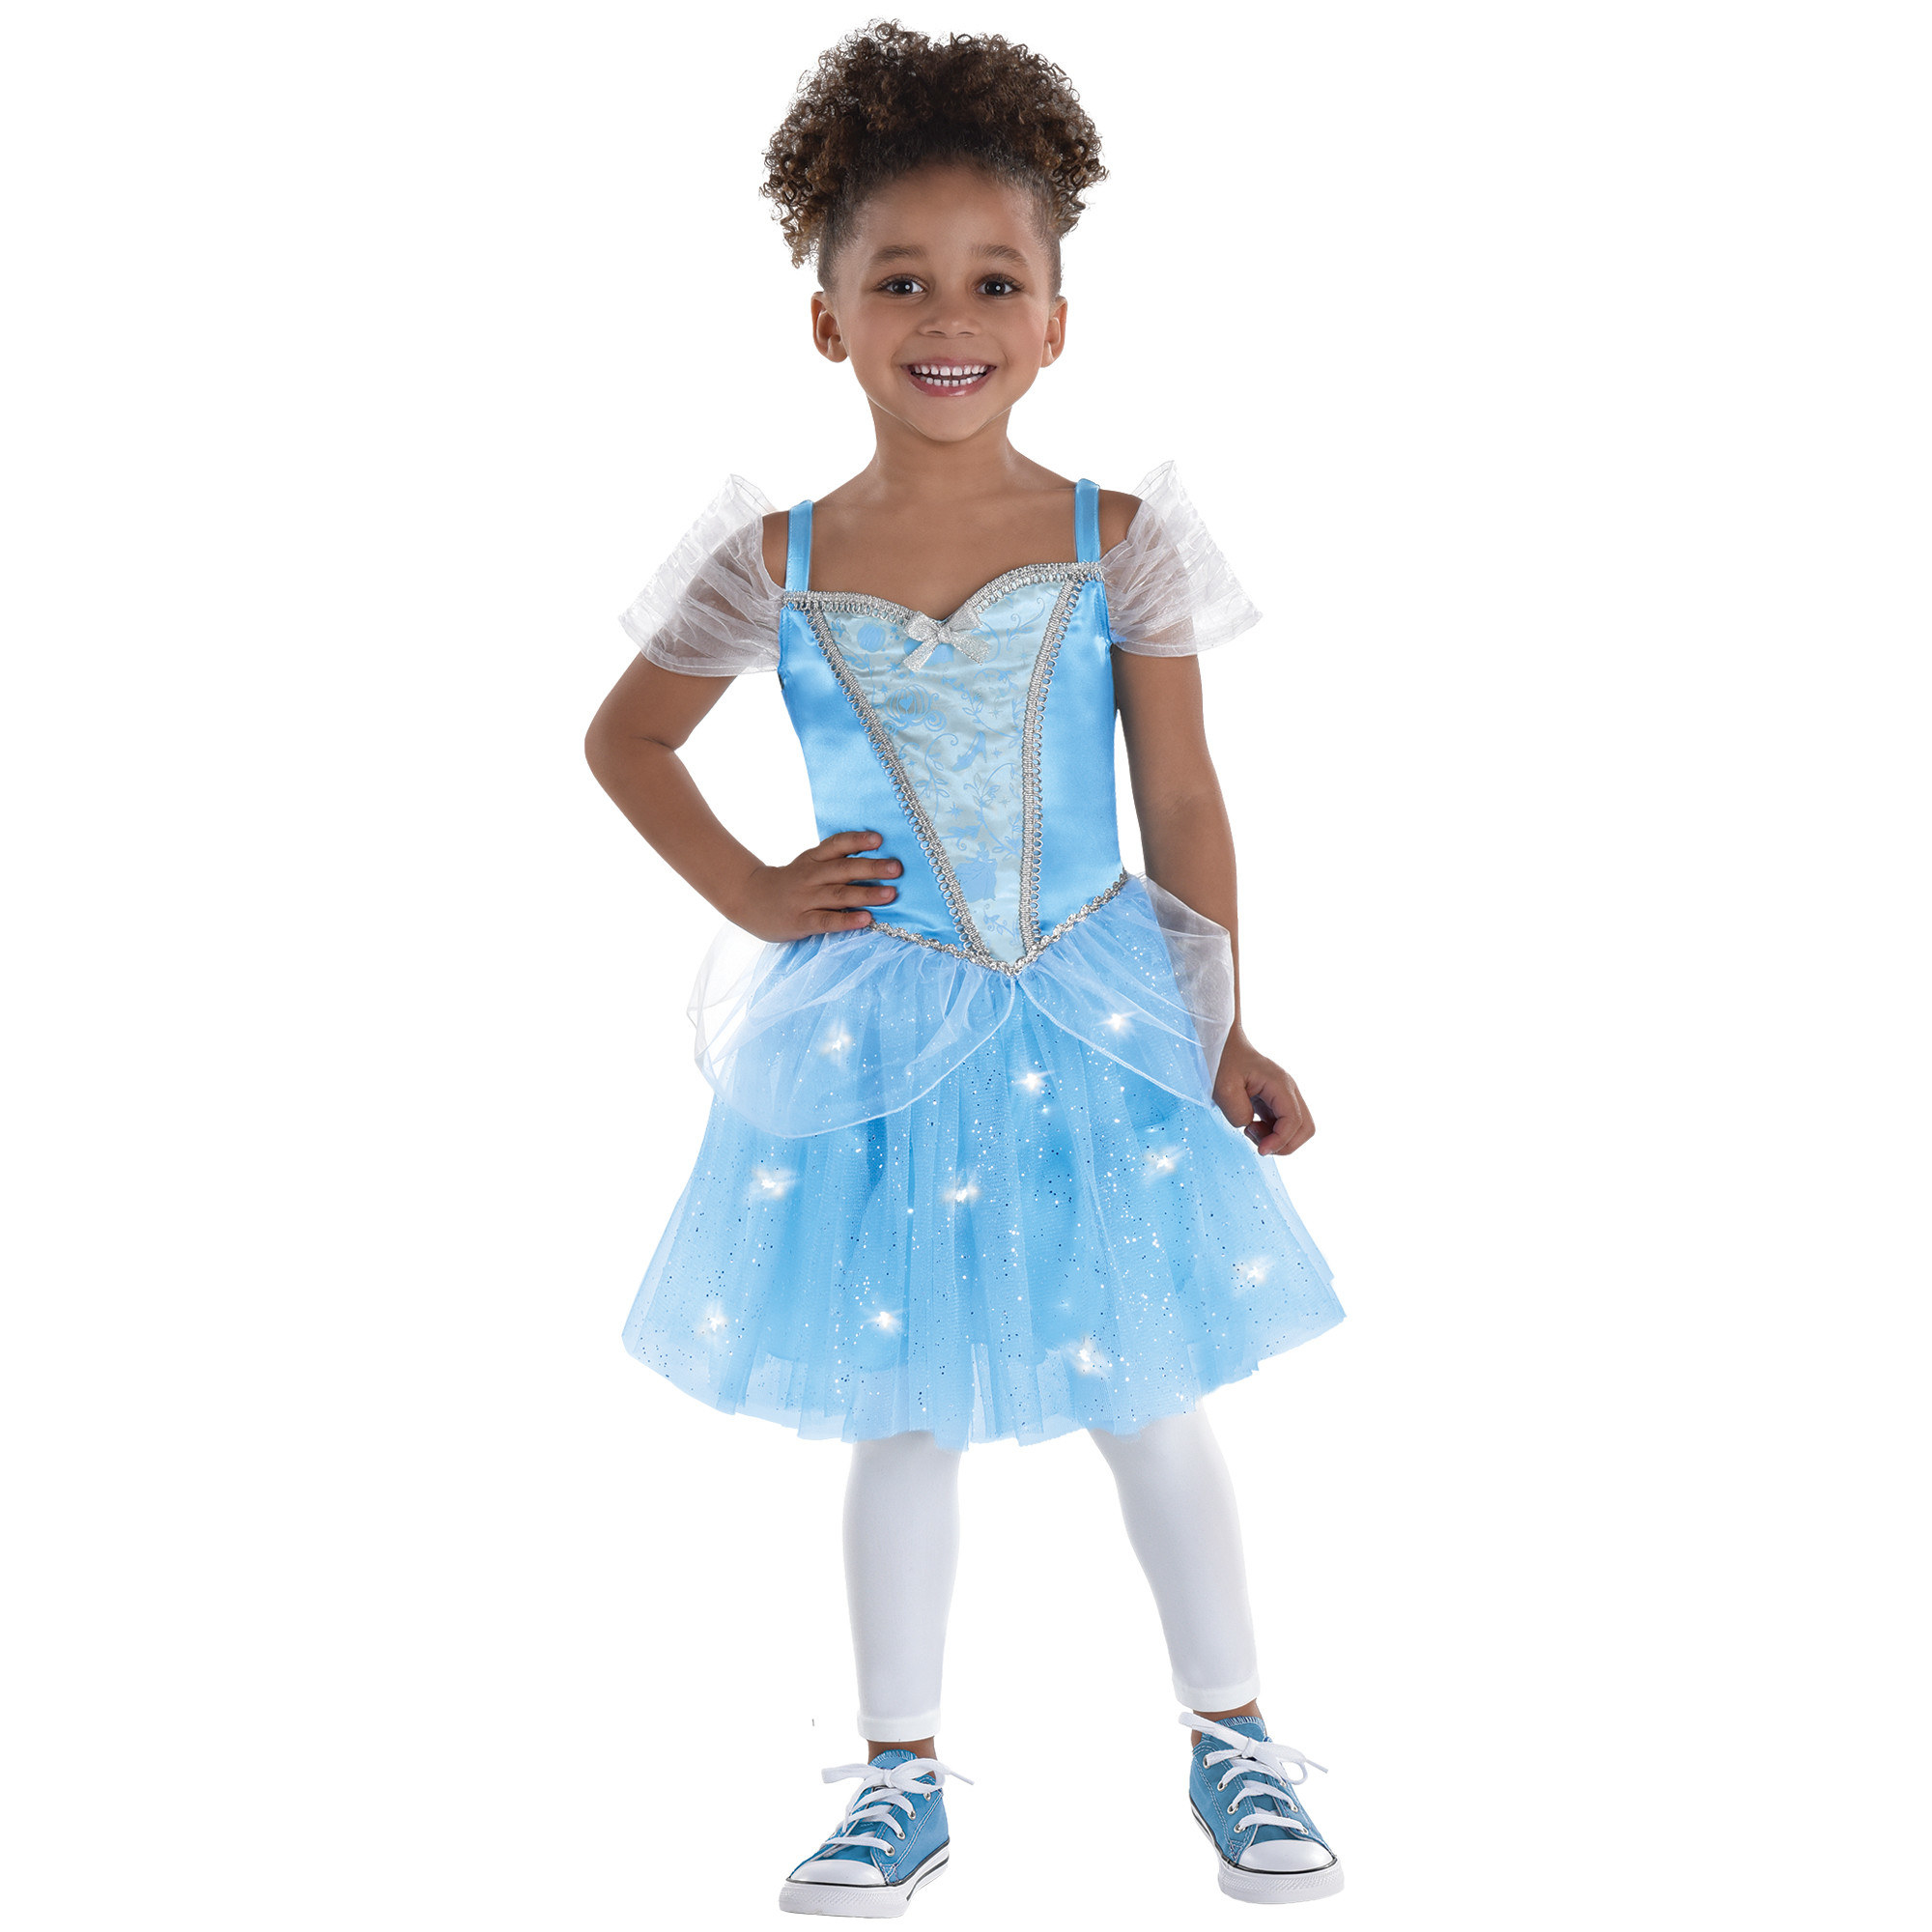 little girl in cinderella costume